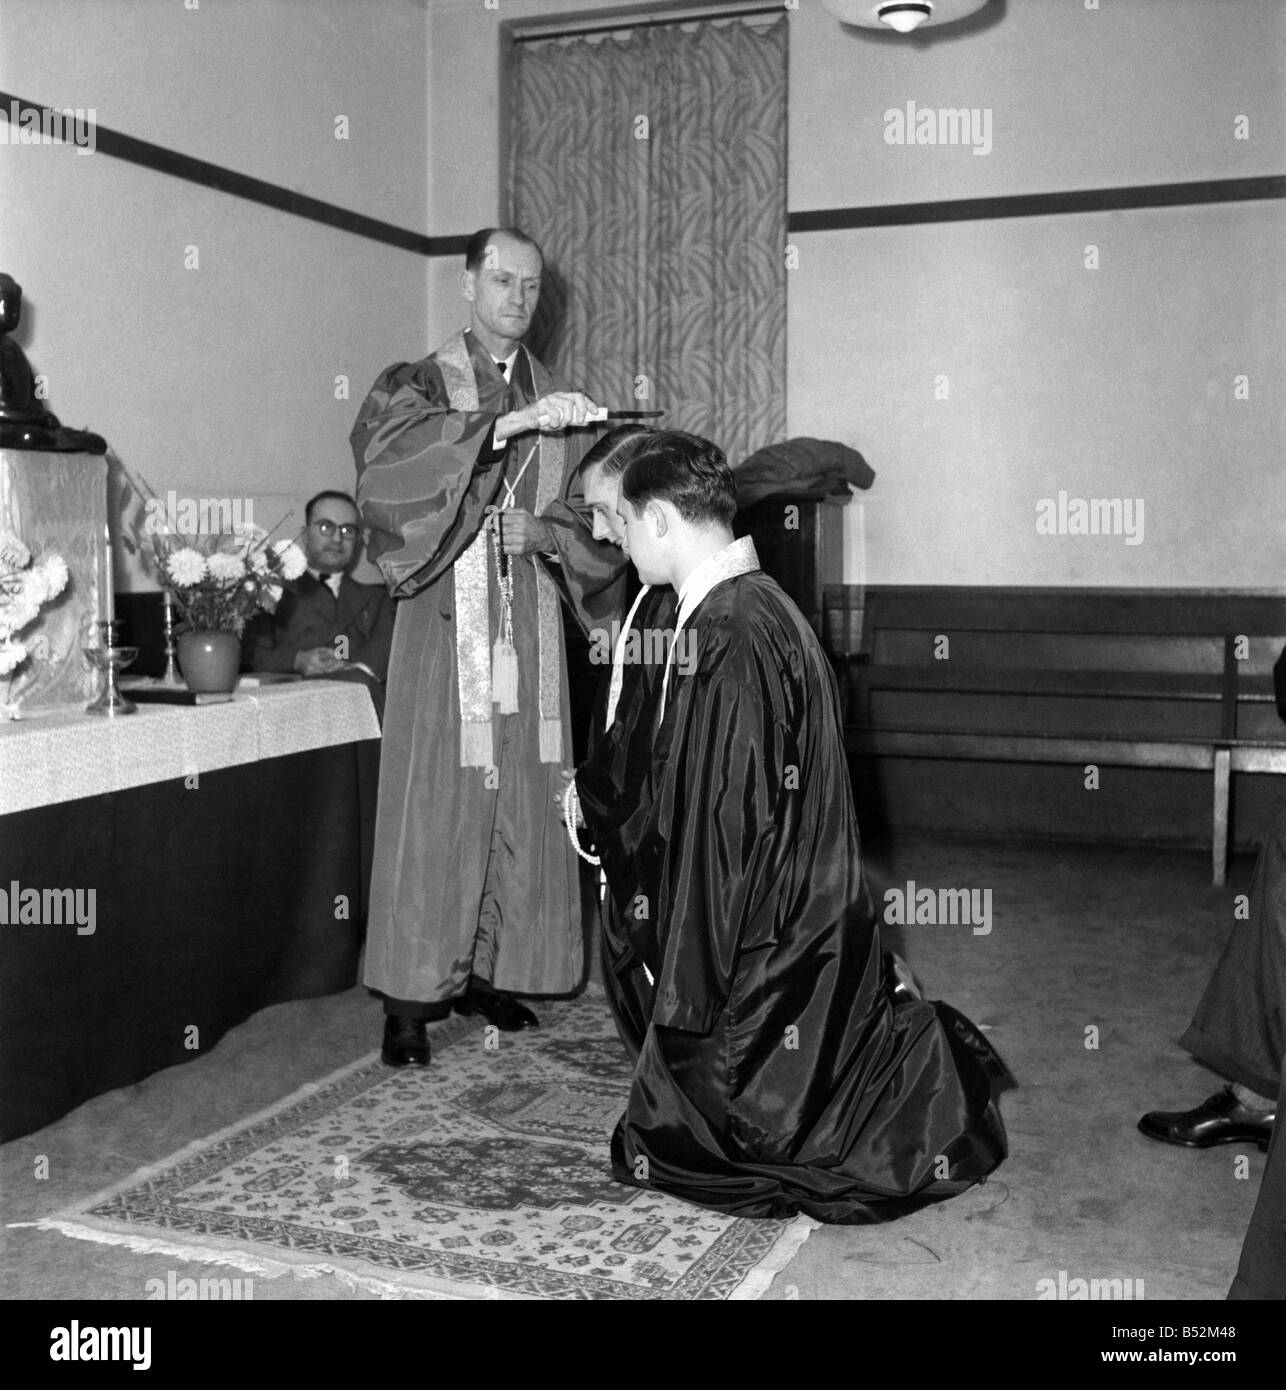 Ven. Robert Stewart Clifton - Western Buddhists. October 1952 C5139 Stock Photo